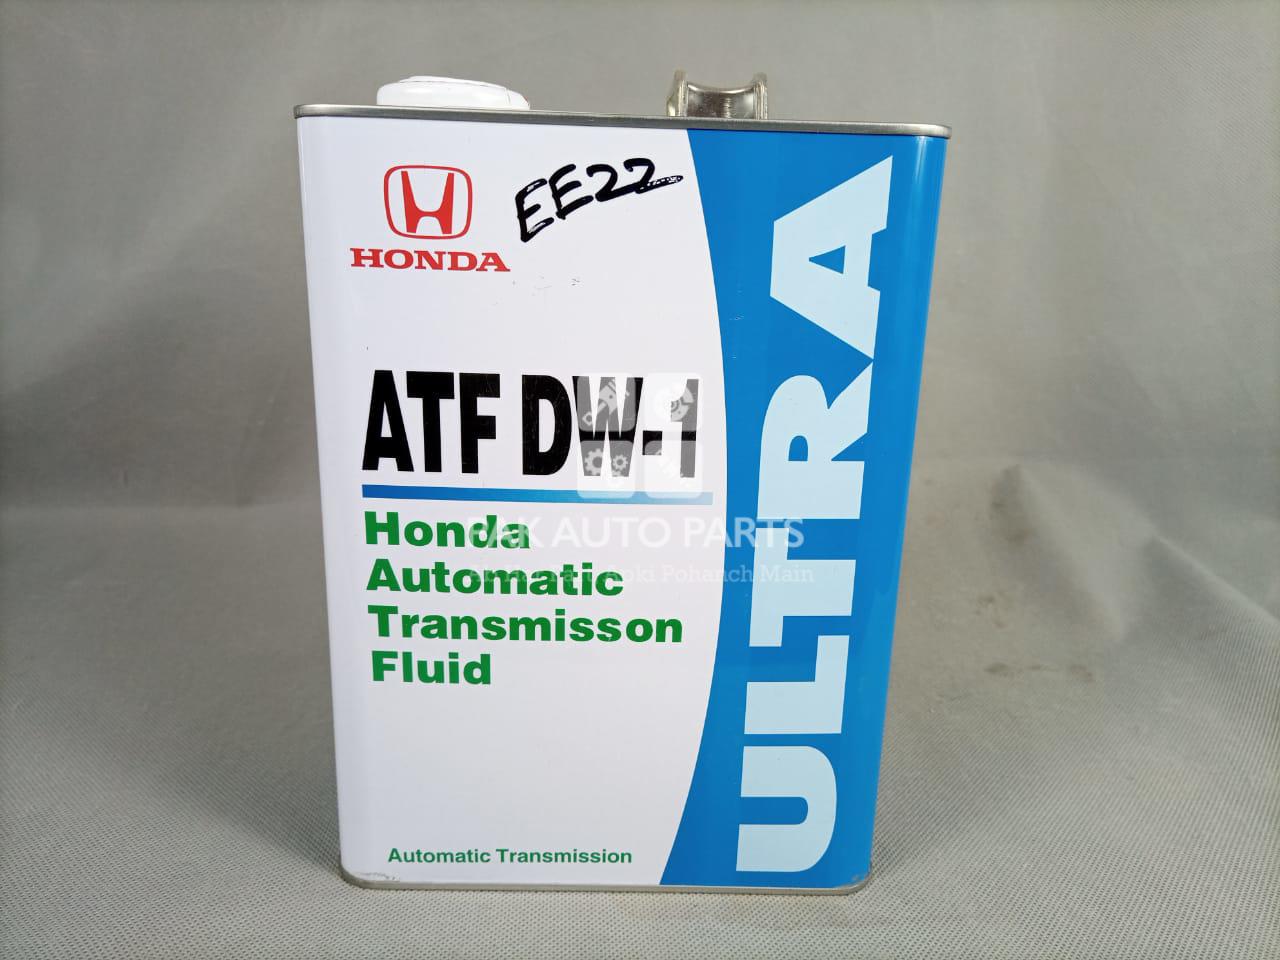 Honda ATF DW-1. Honda ATF dw1 4л артикул. Масло Honda ATF dw1 4 литра. ATF dw1 Honda железная банка.